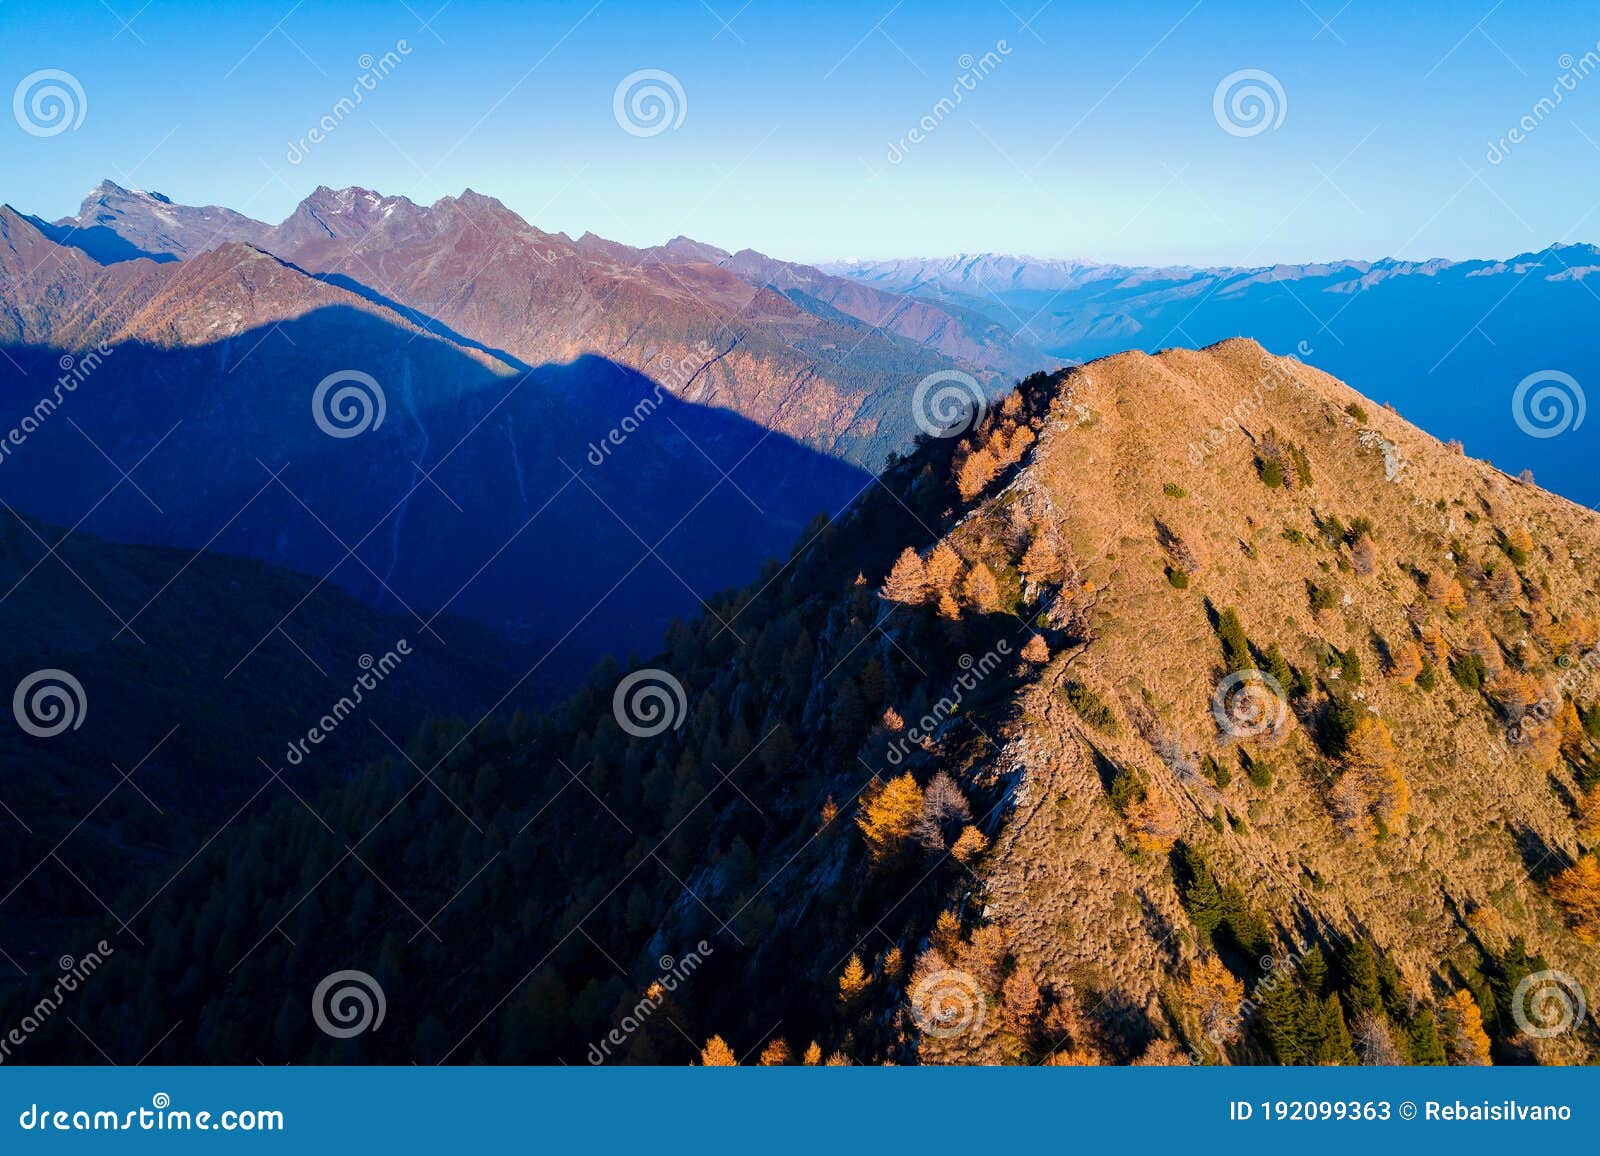 sondrio - valtellina it - aerial view of alpe colina